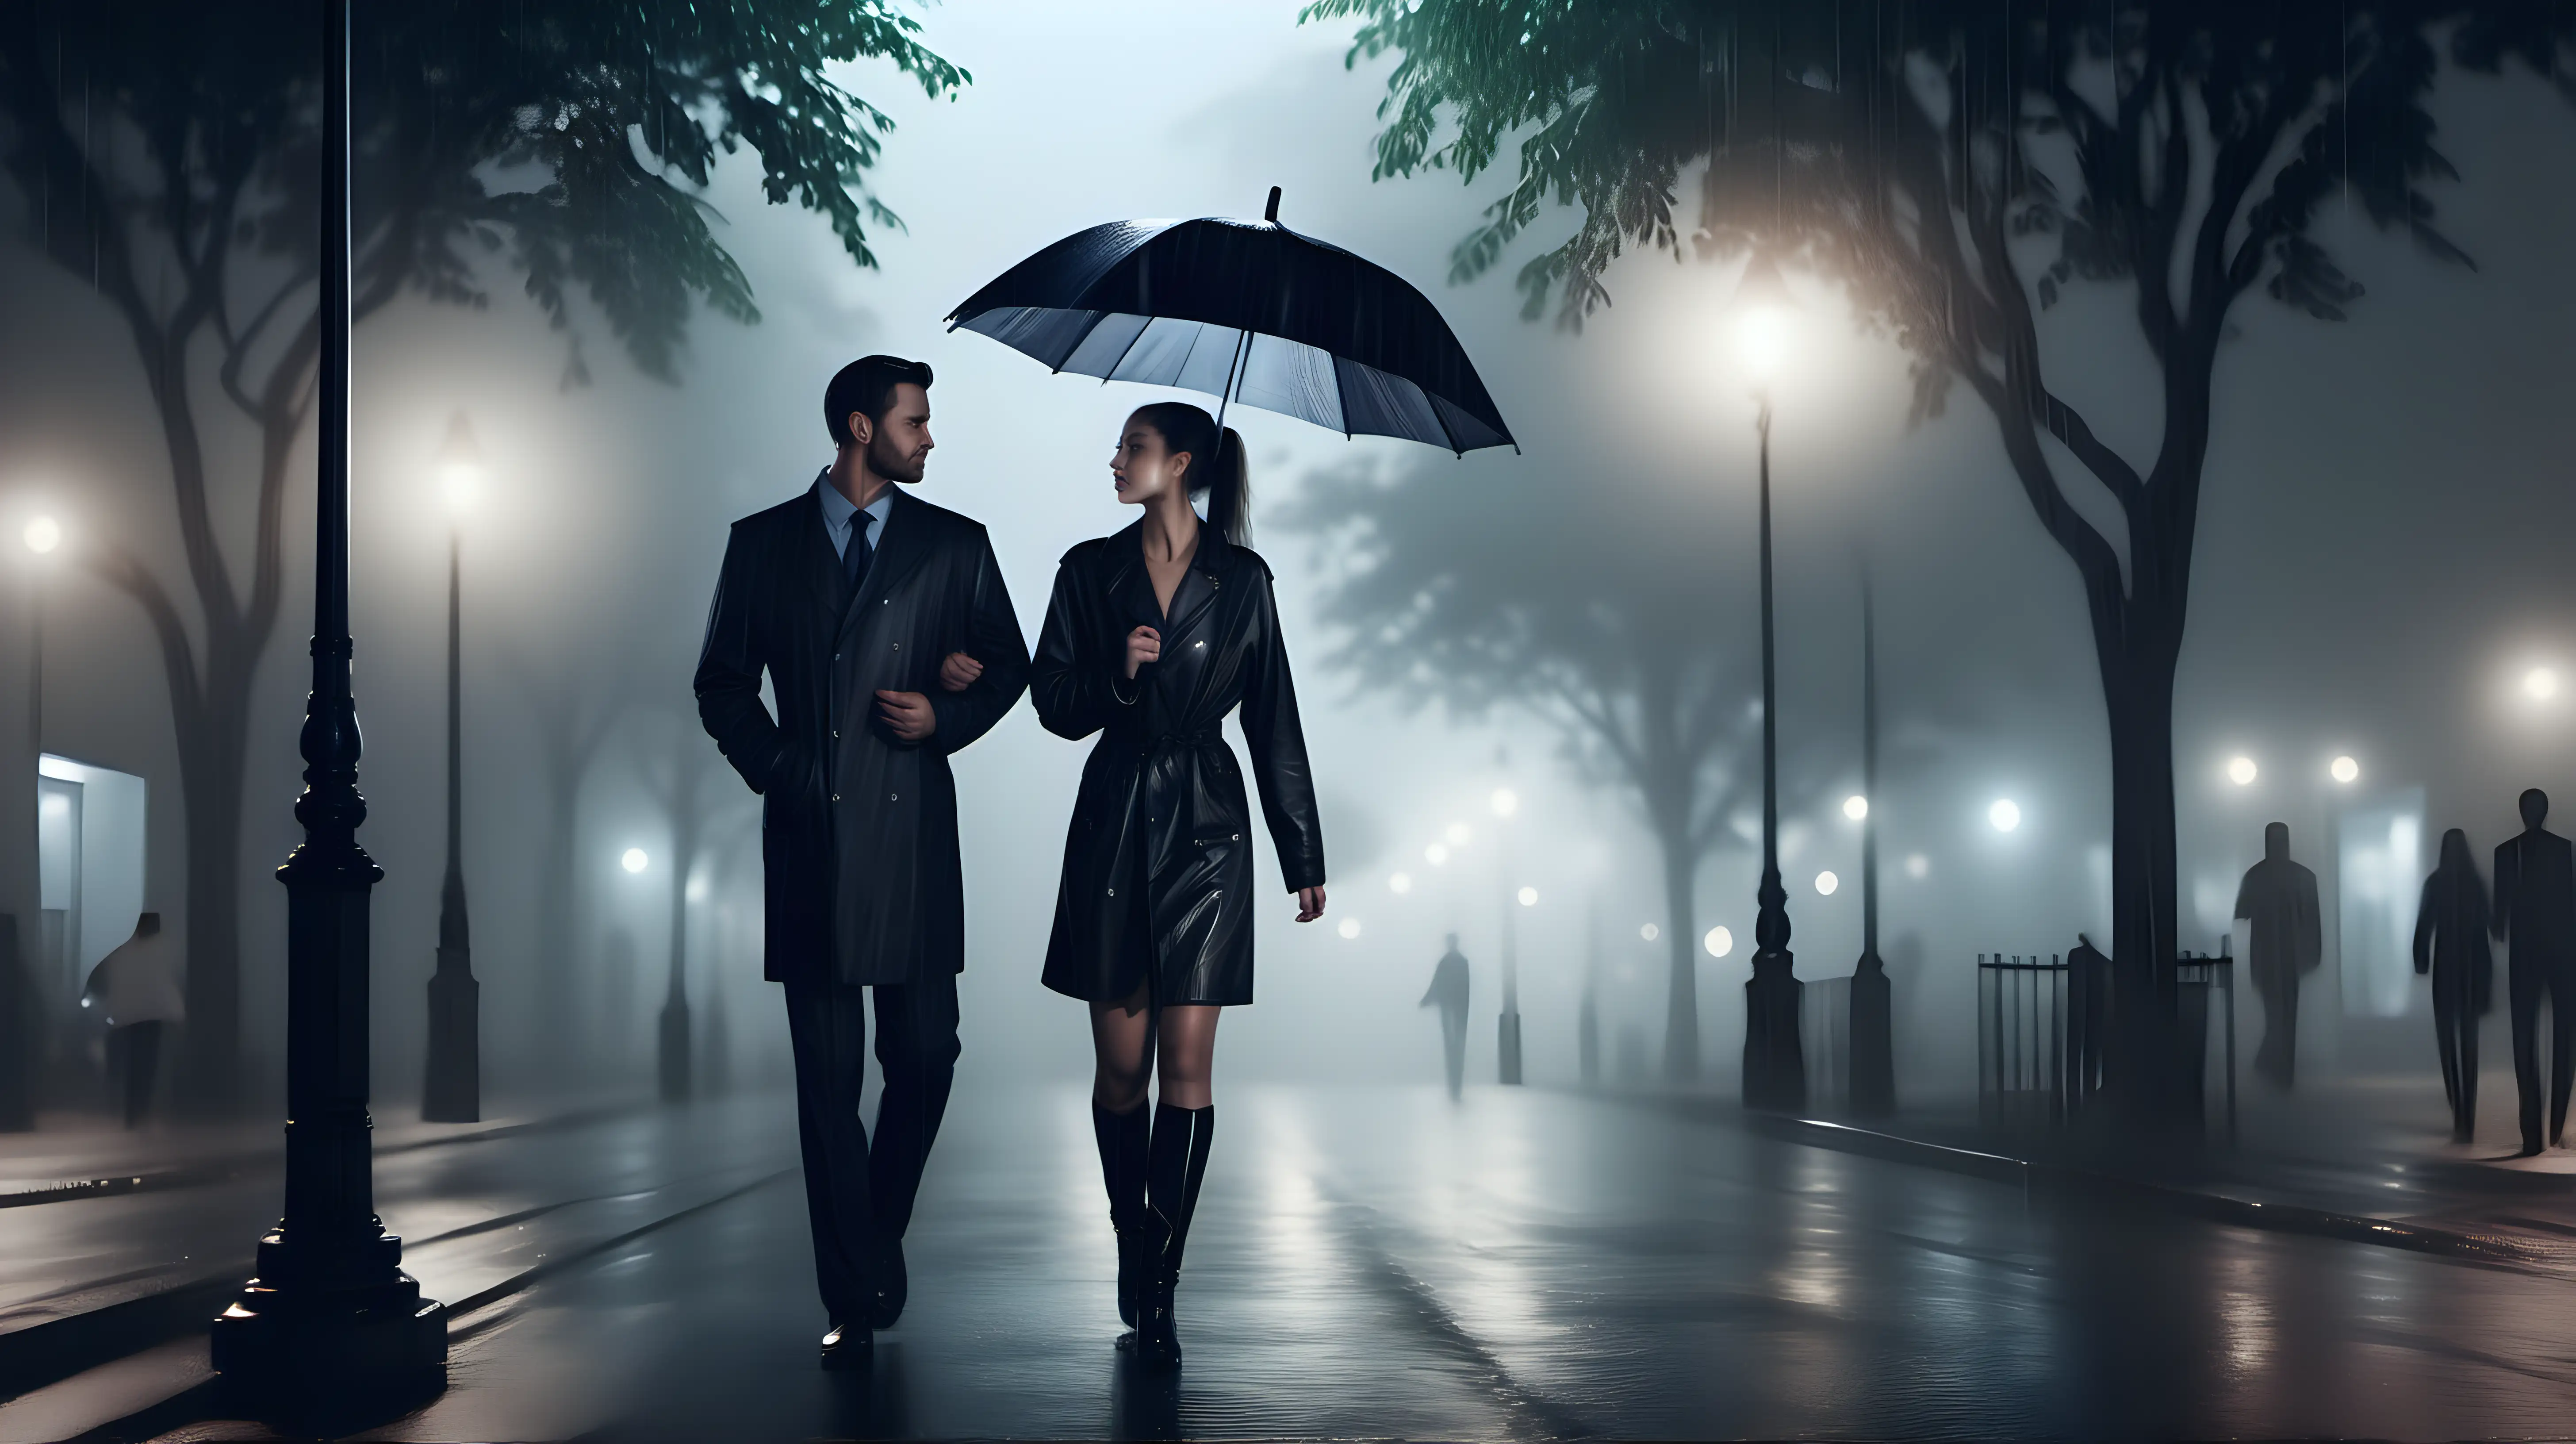 Romantic Night Stroll Couple Walking under Umbrella in Rainy Street